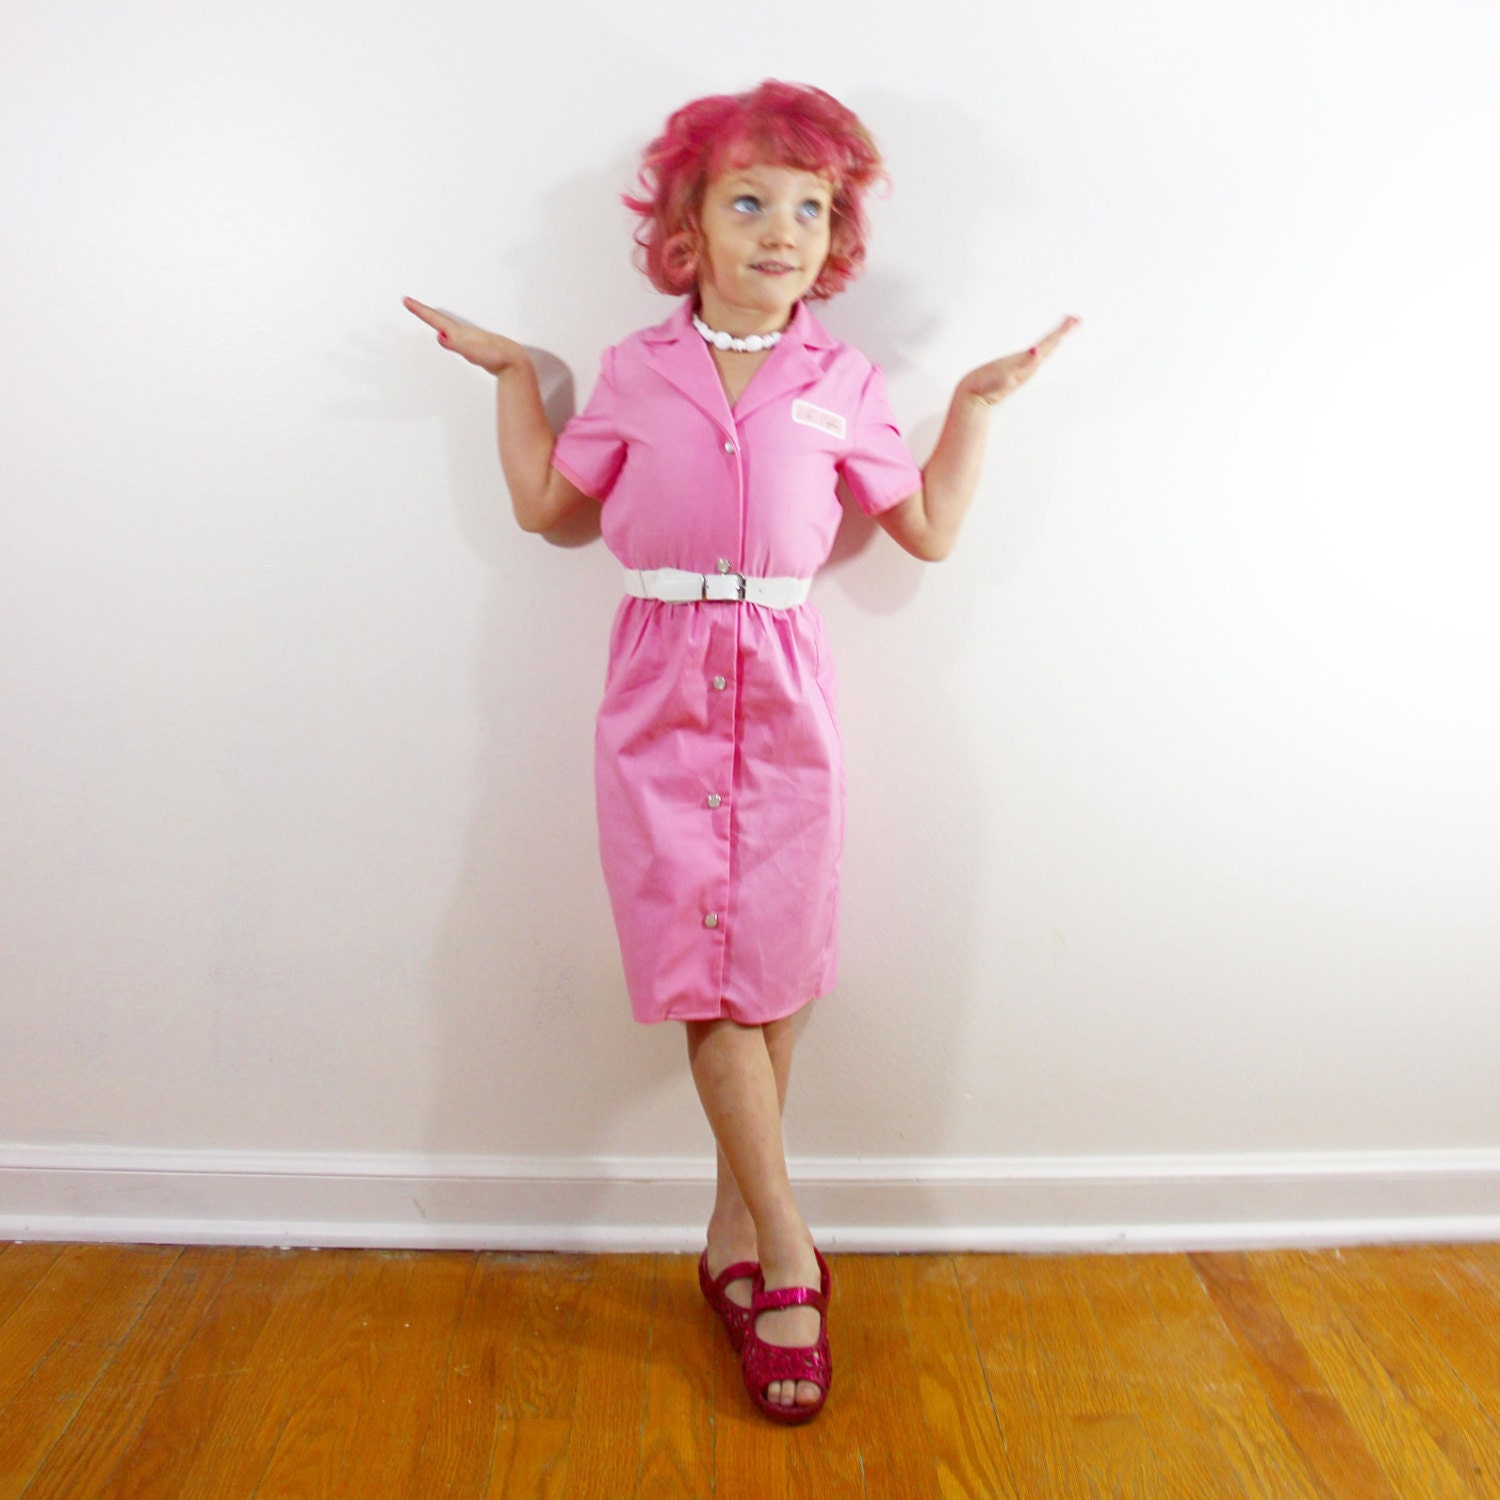 beauty school dropout costume ideas